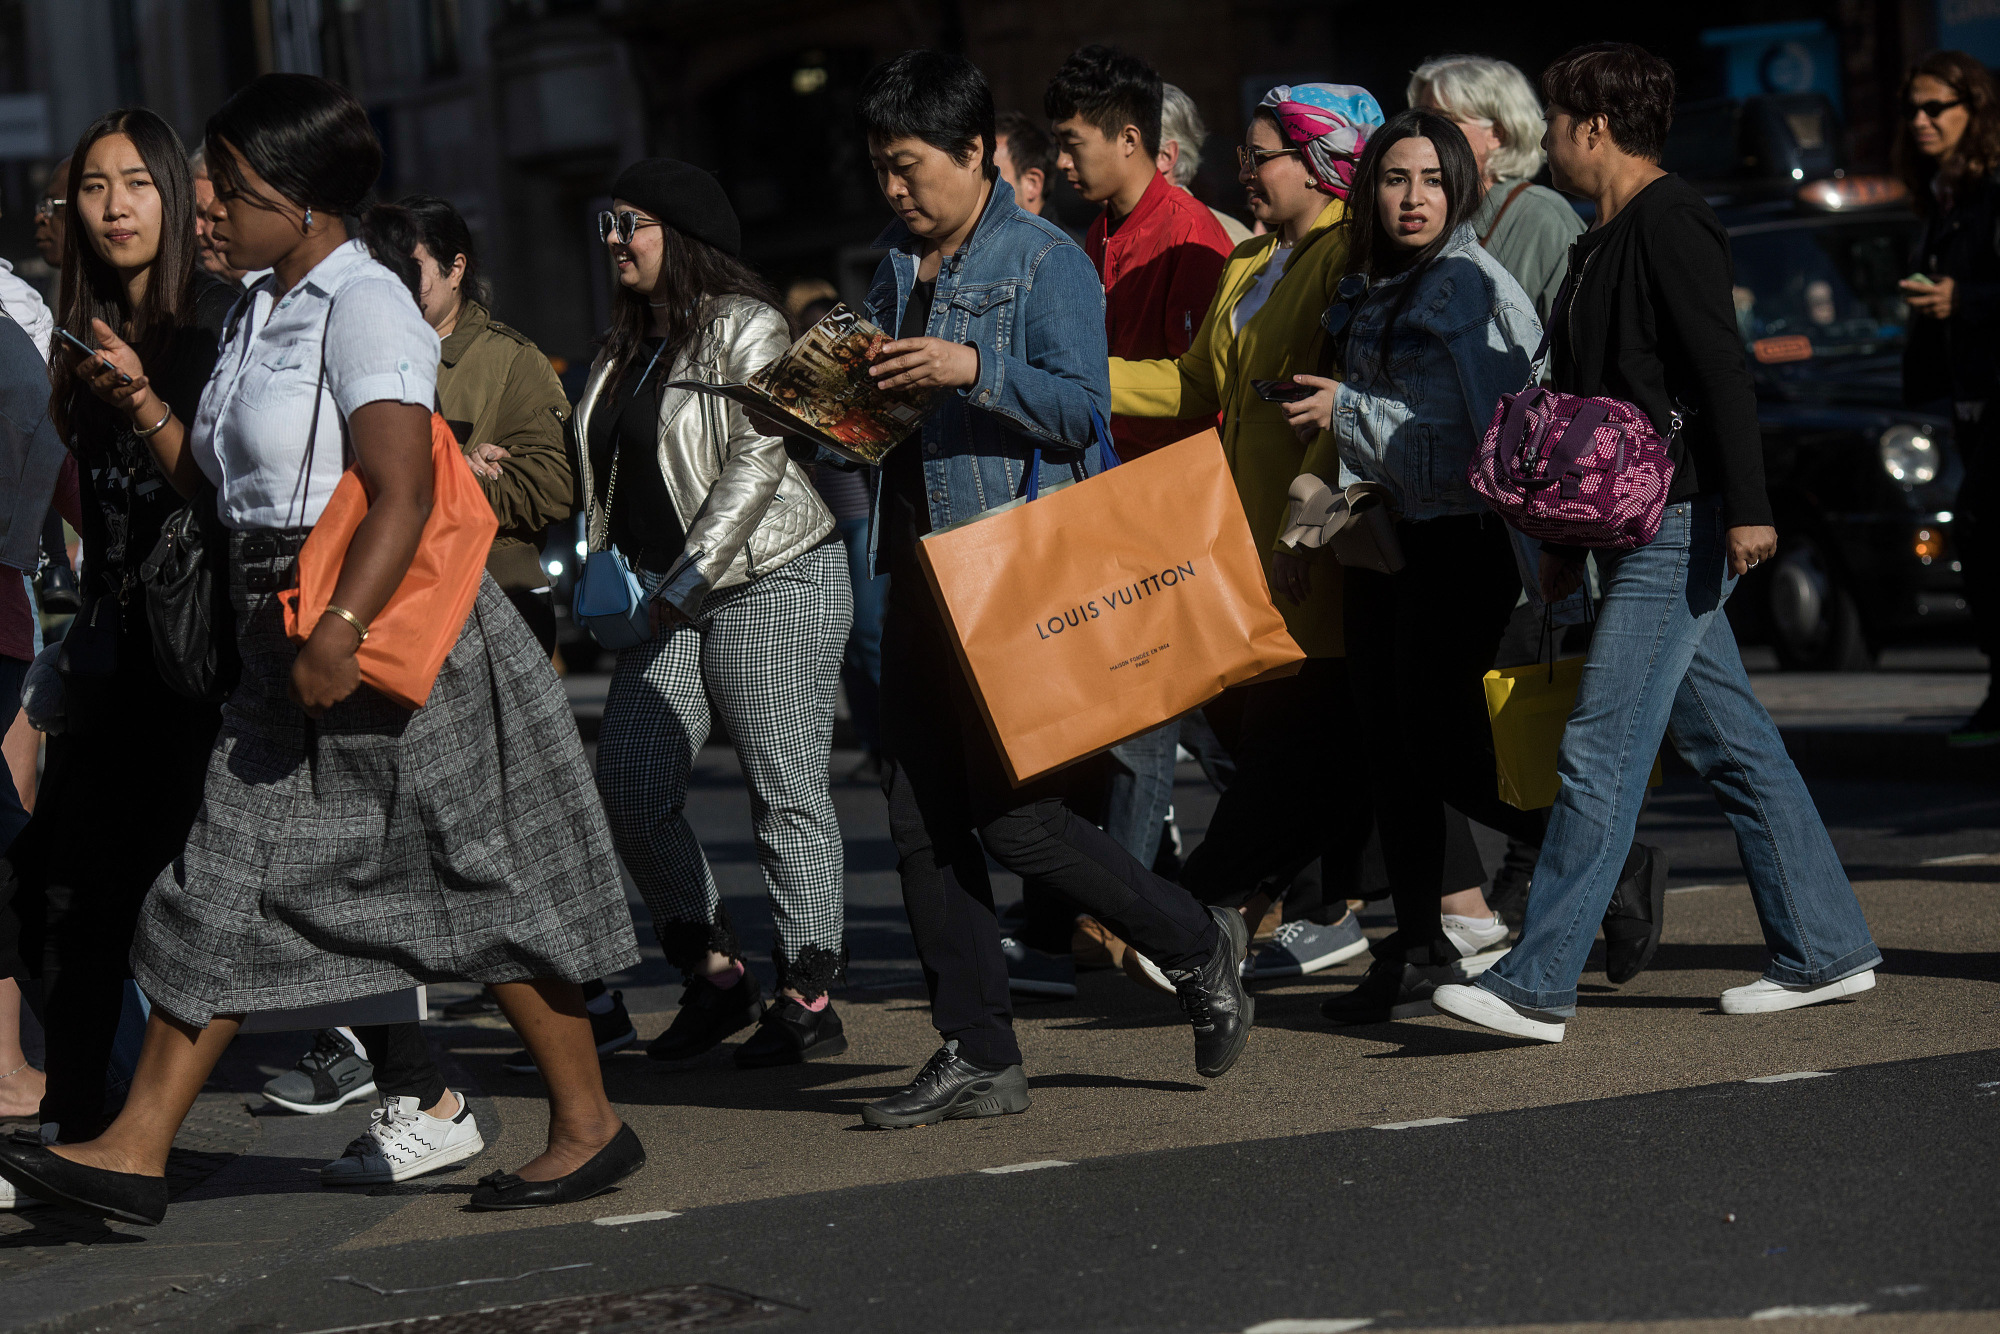 Louis Vuitton handbags 'cheapest in London' after Brexit vote